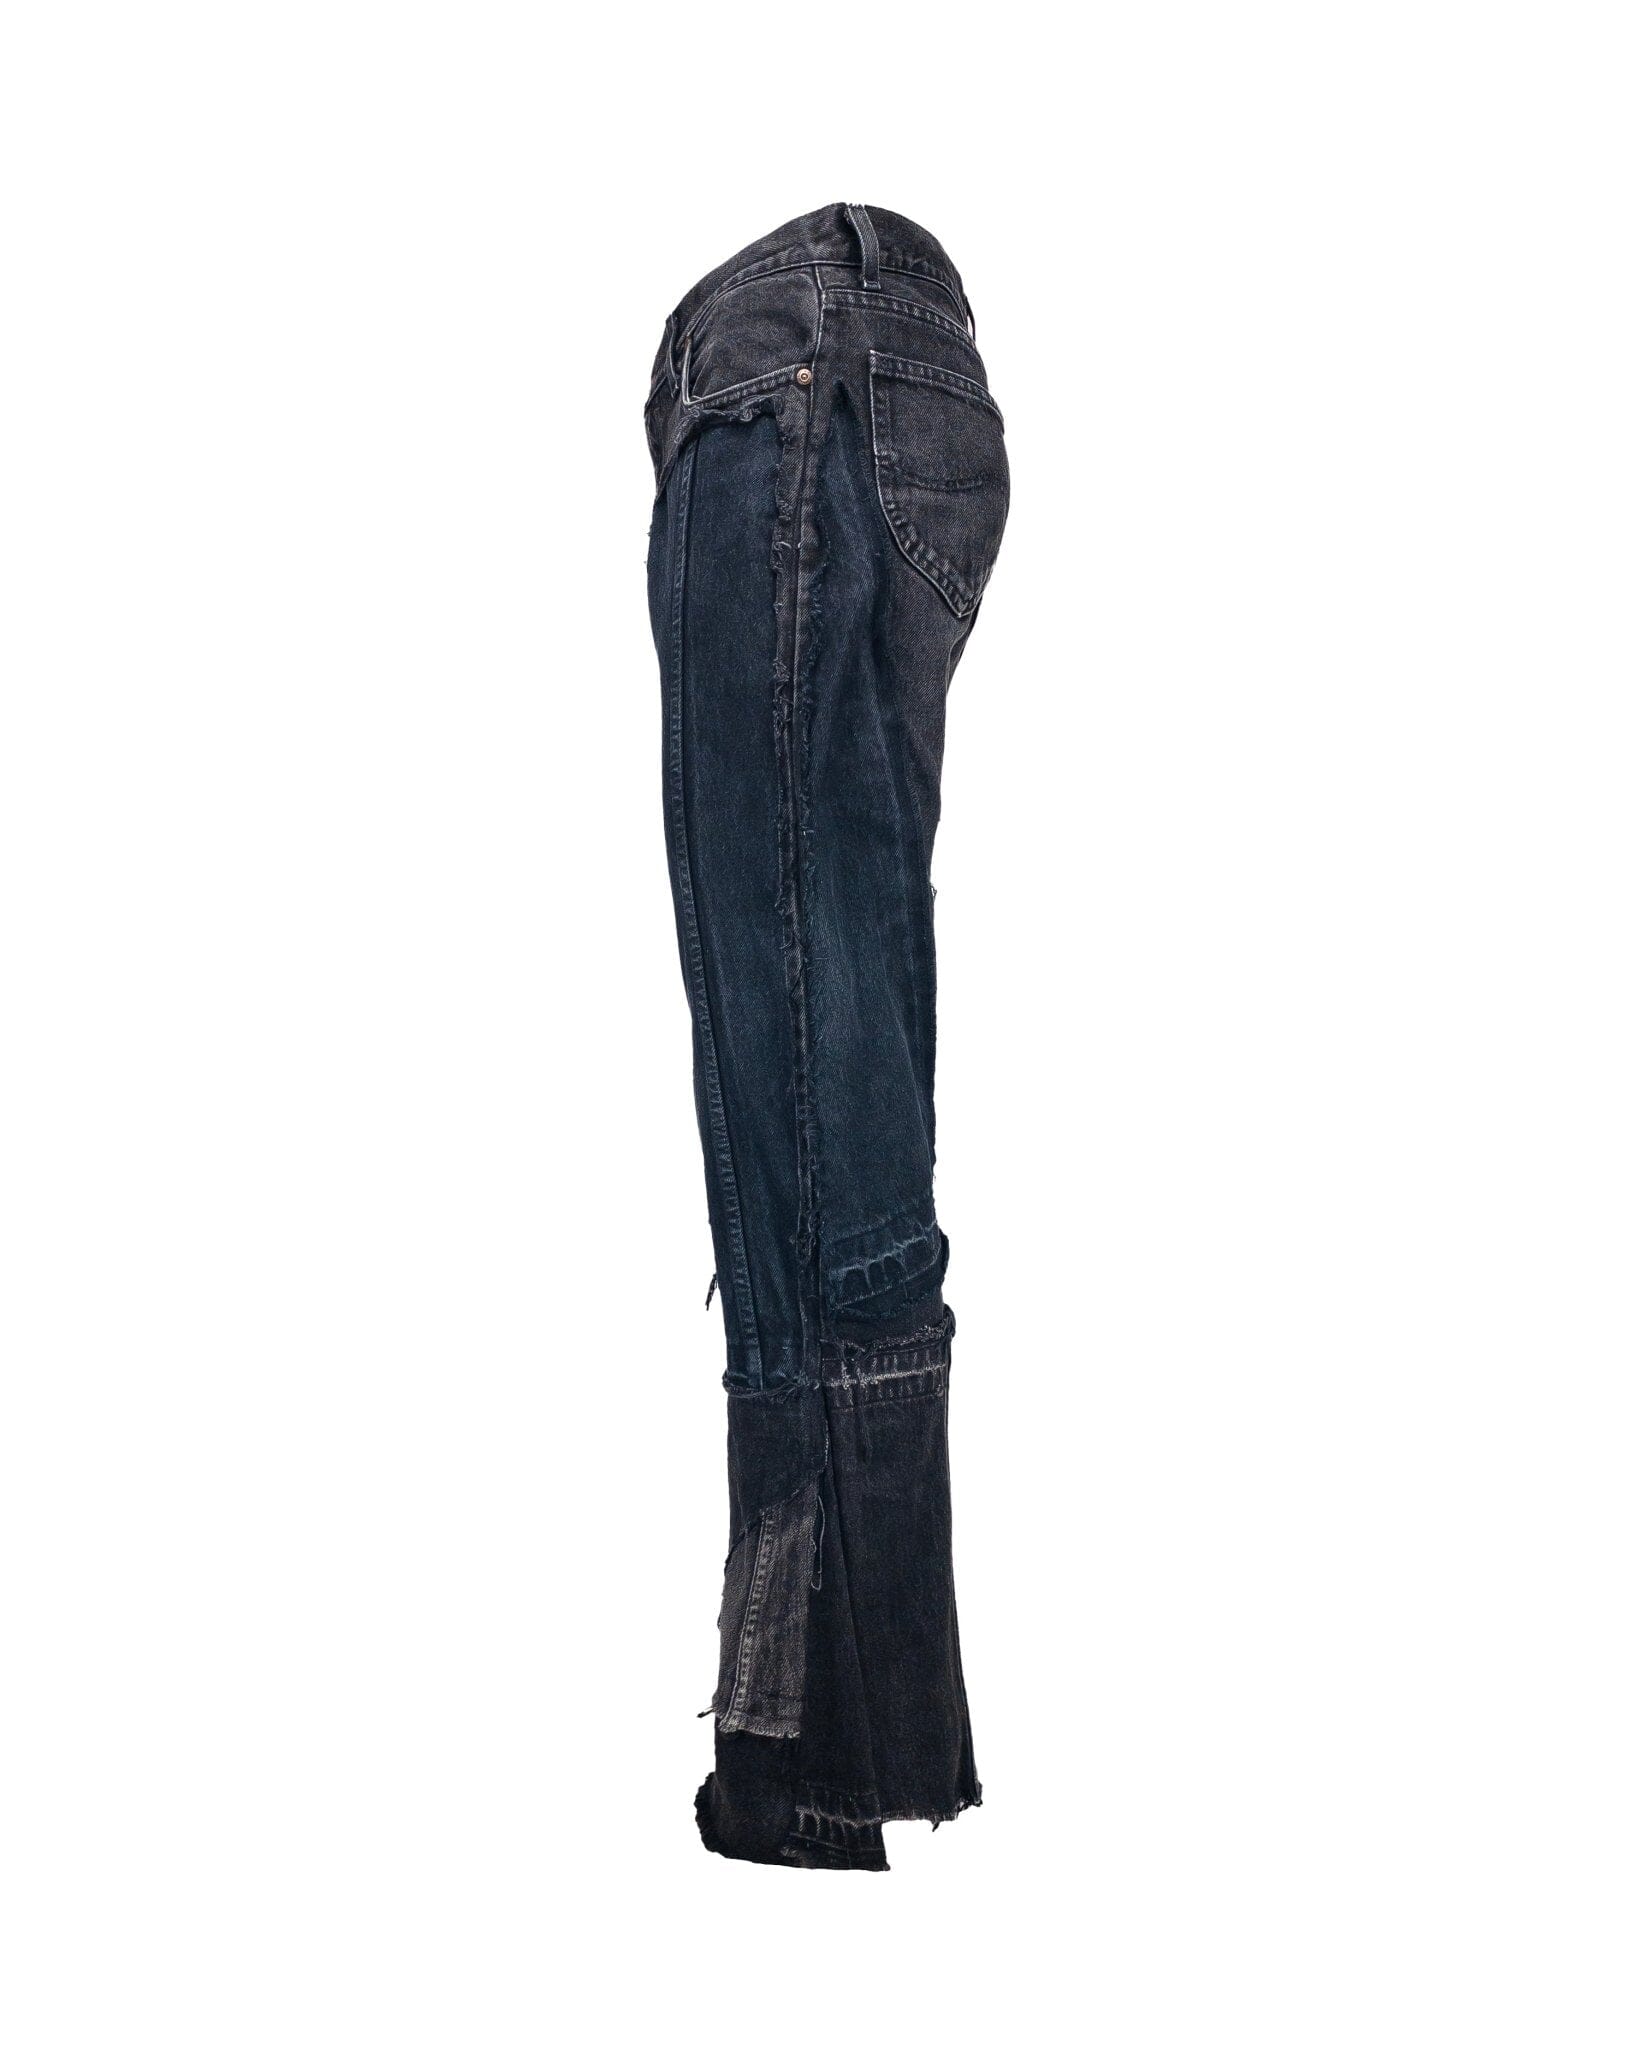 Jeans Straight Flare Reworked Vintage Paneled Black